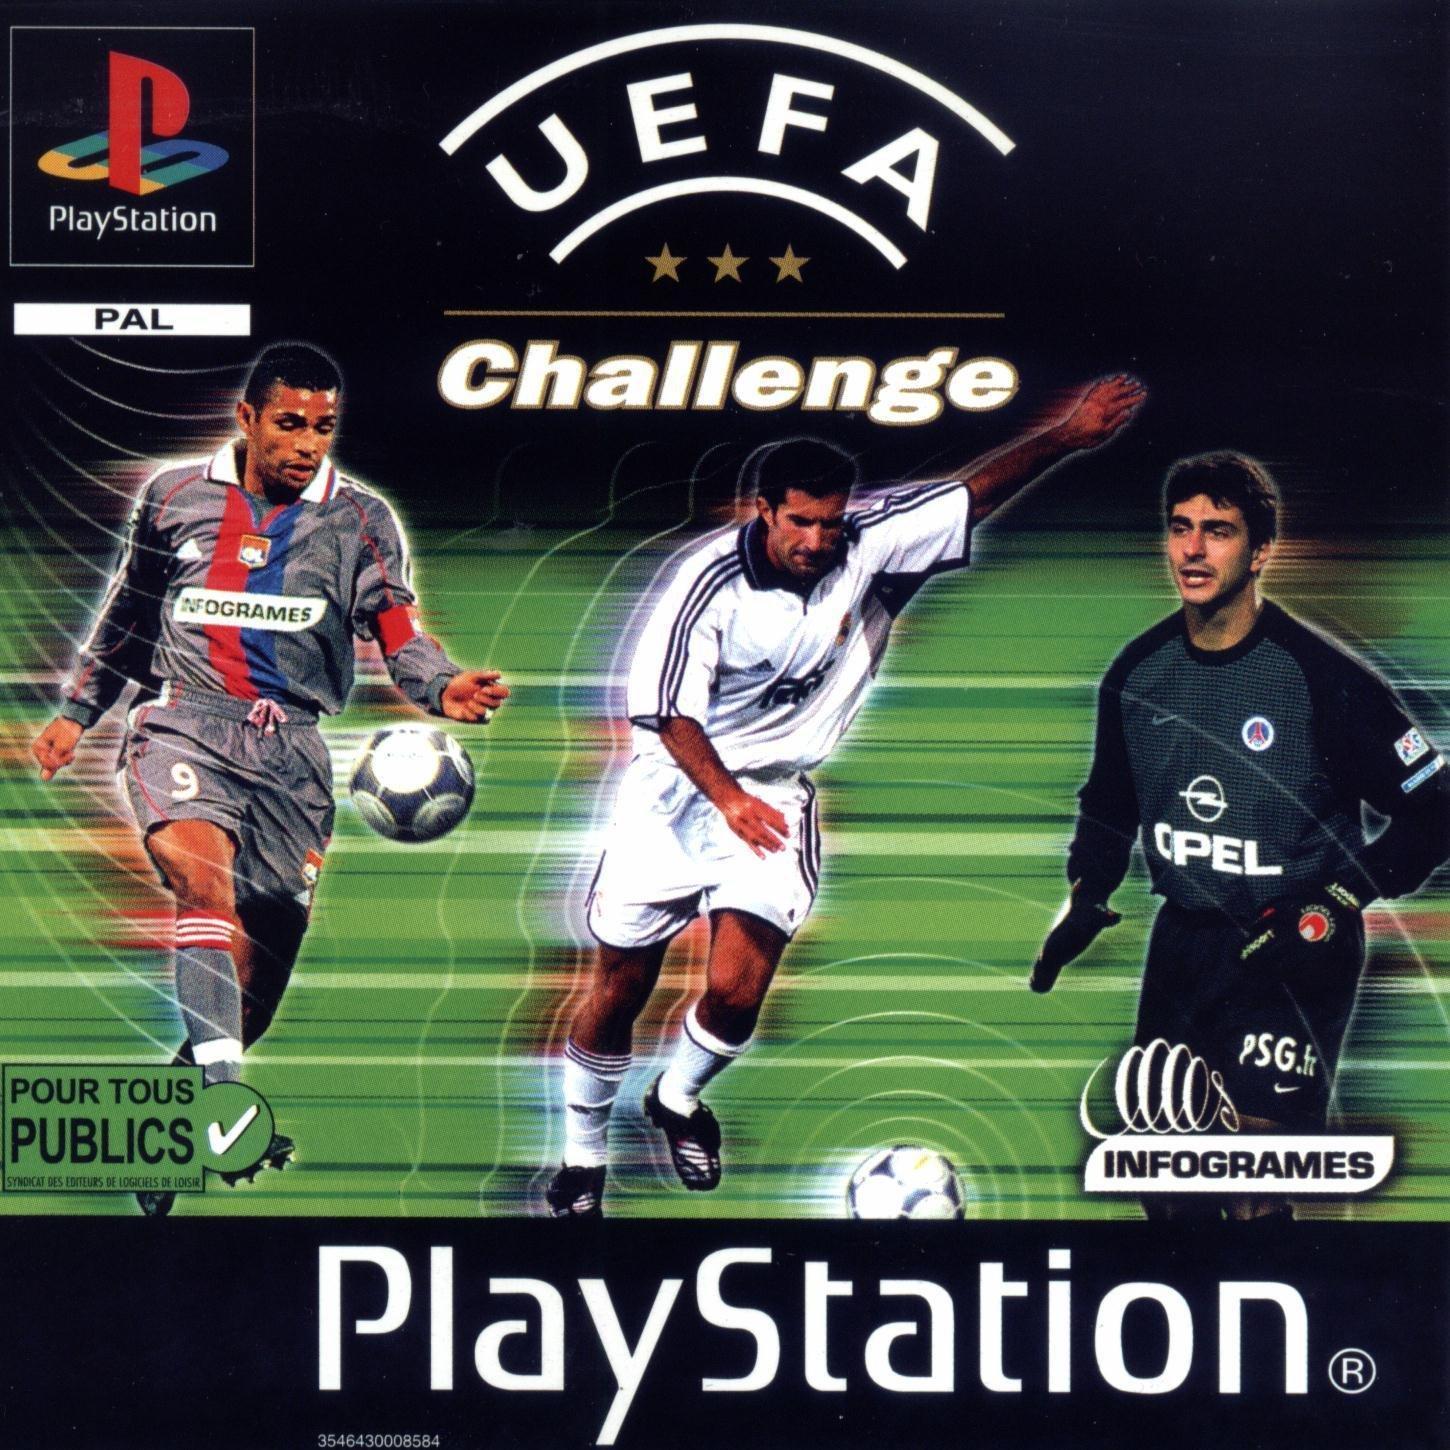 Uefa Challenge psx download